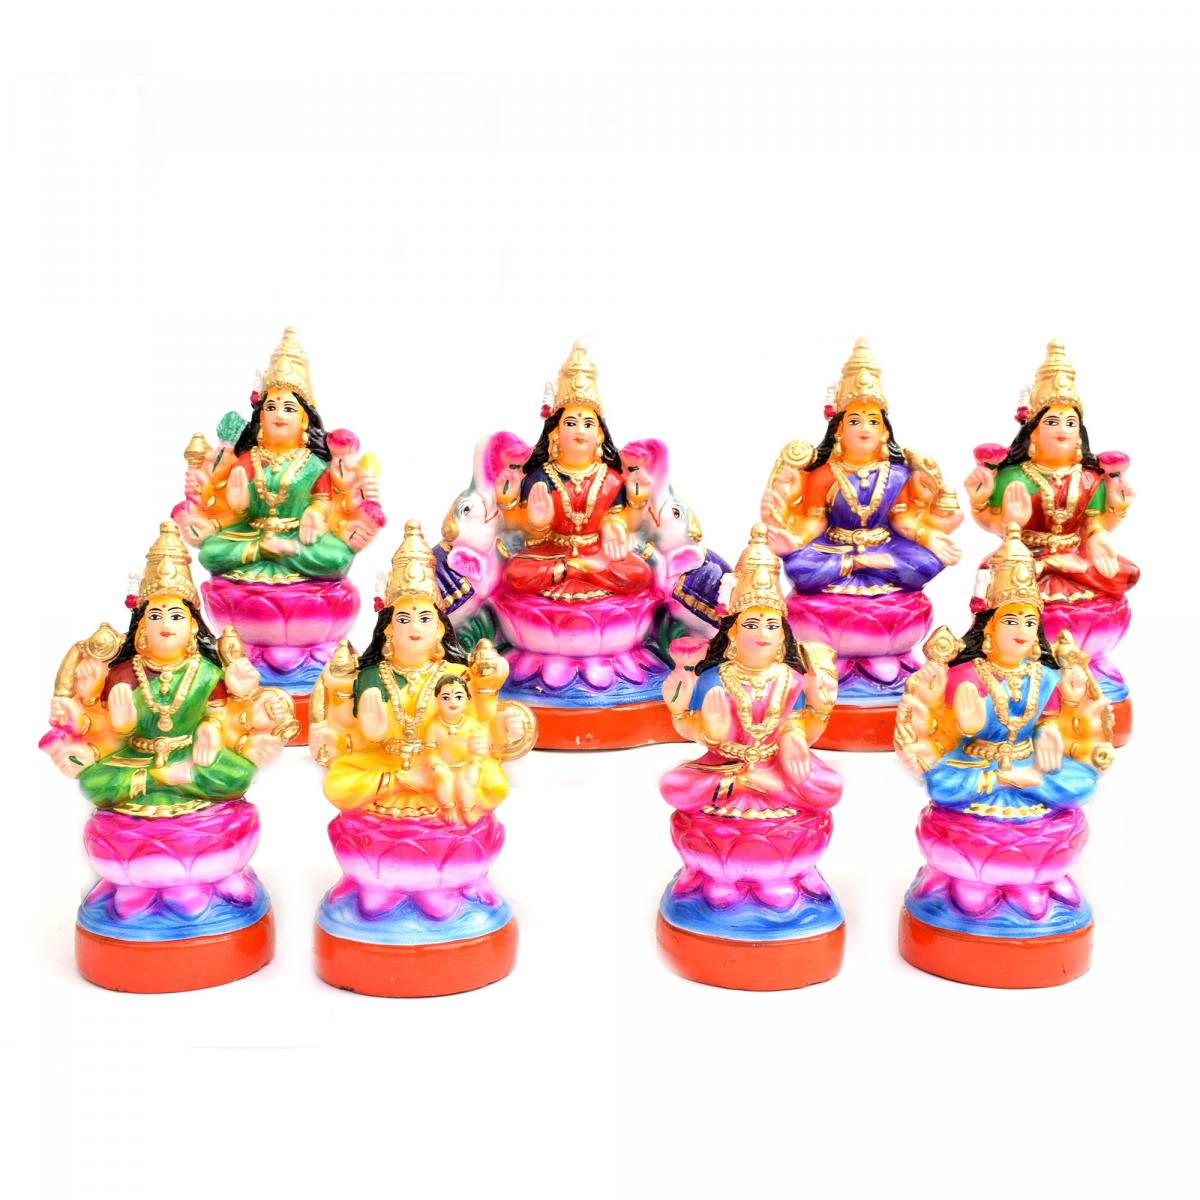 Top 999+ ashtalakshmi images – Amazing Collection ashtalakshmi images Full 4K